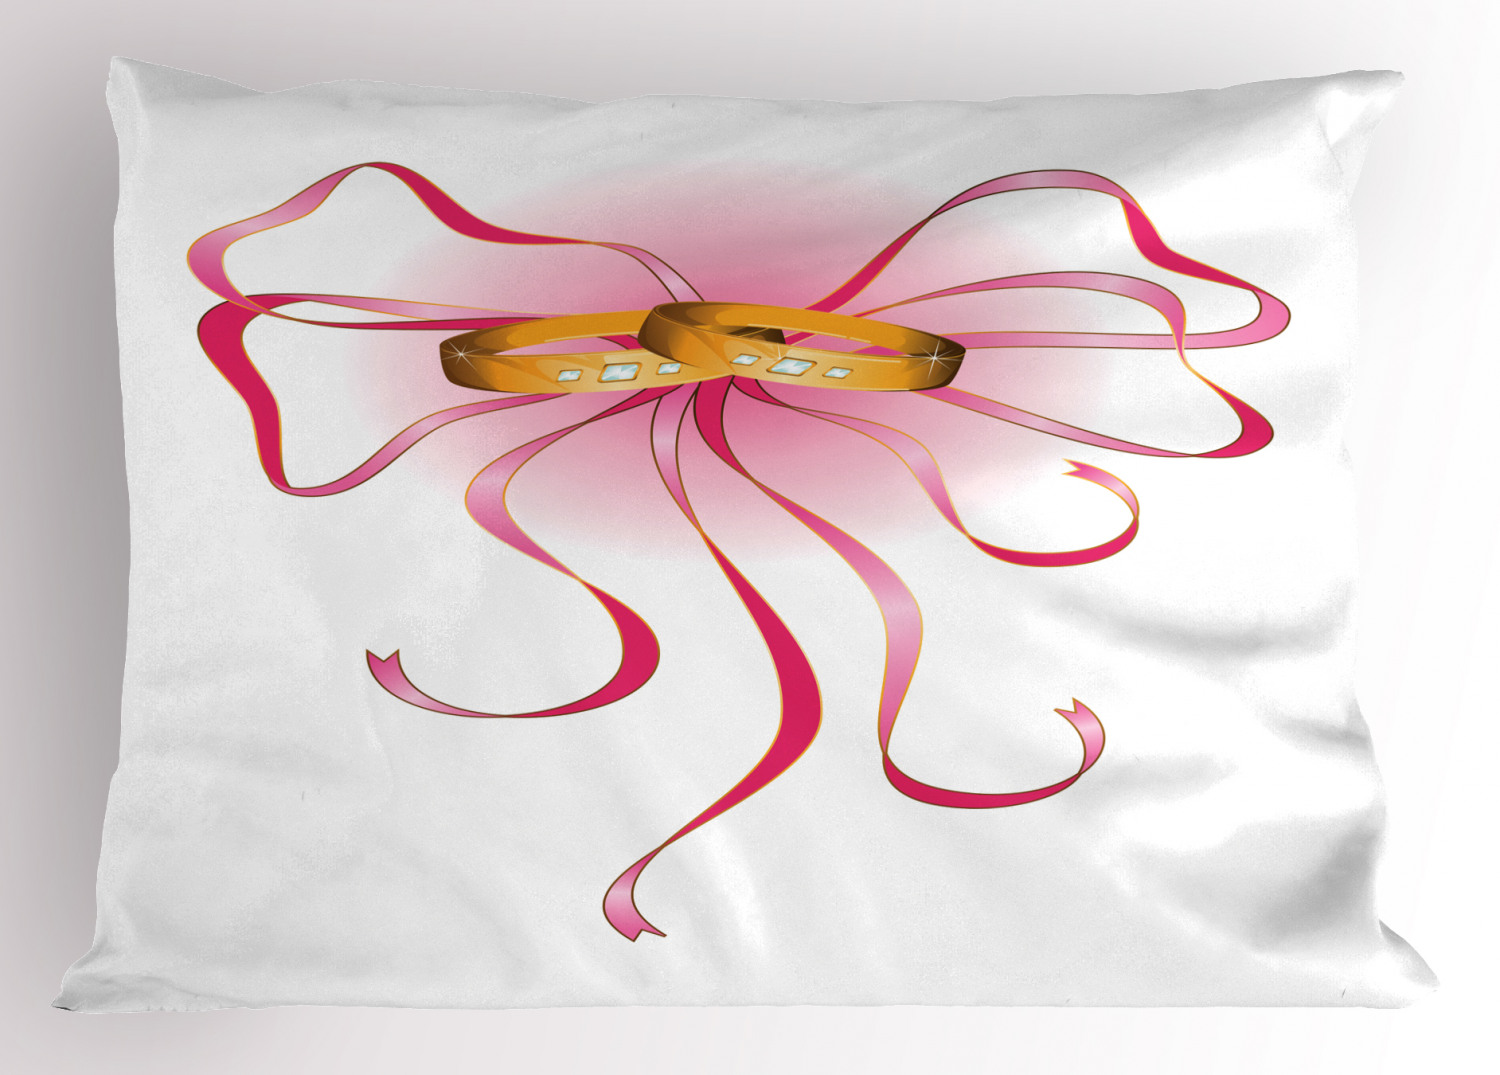 Ambesonne Wedding Pillow Sham Decorative Pillowcase 3 Sizes for Bedroom Decor 